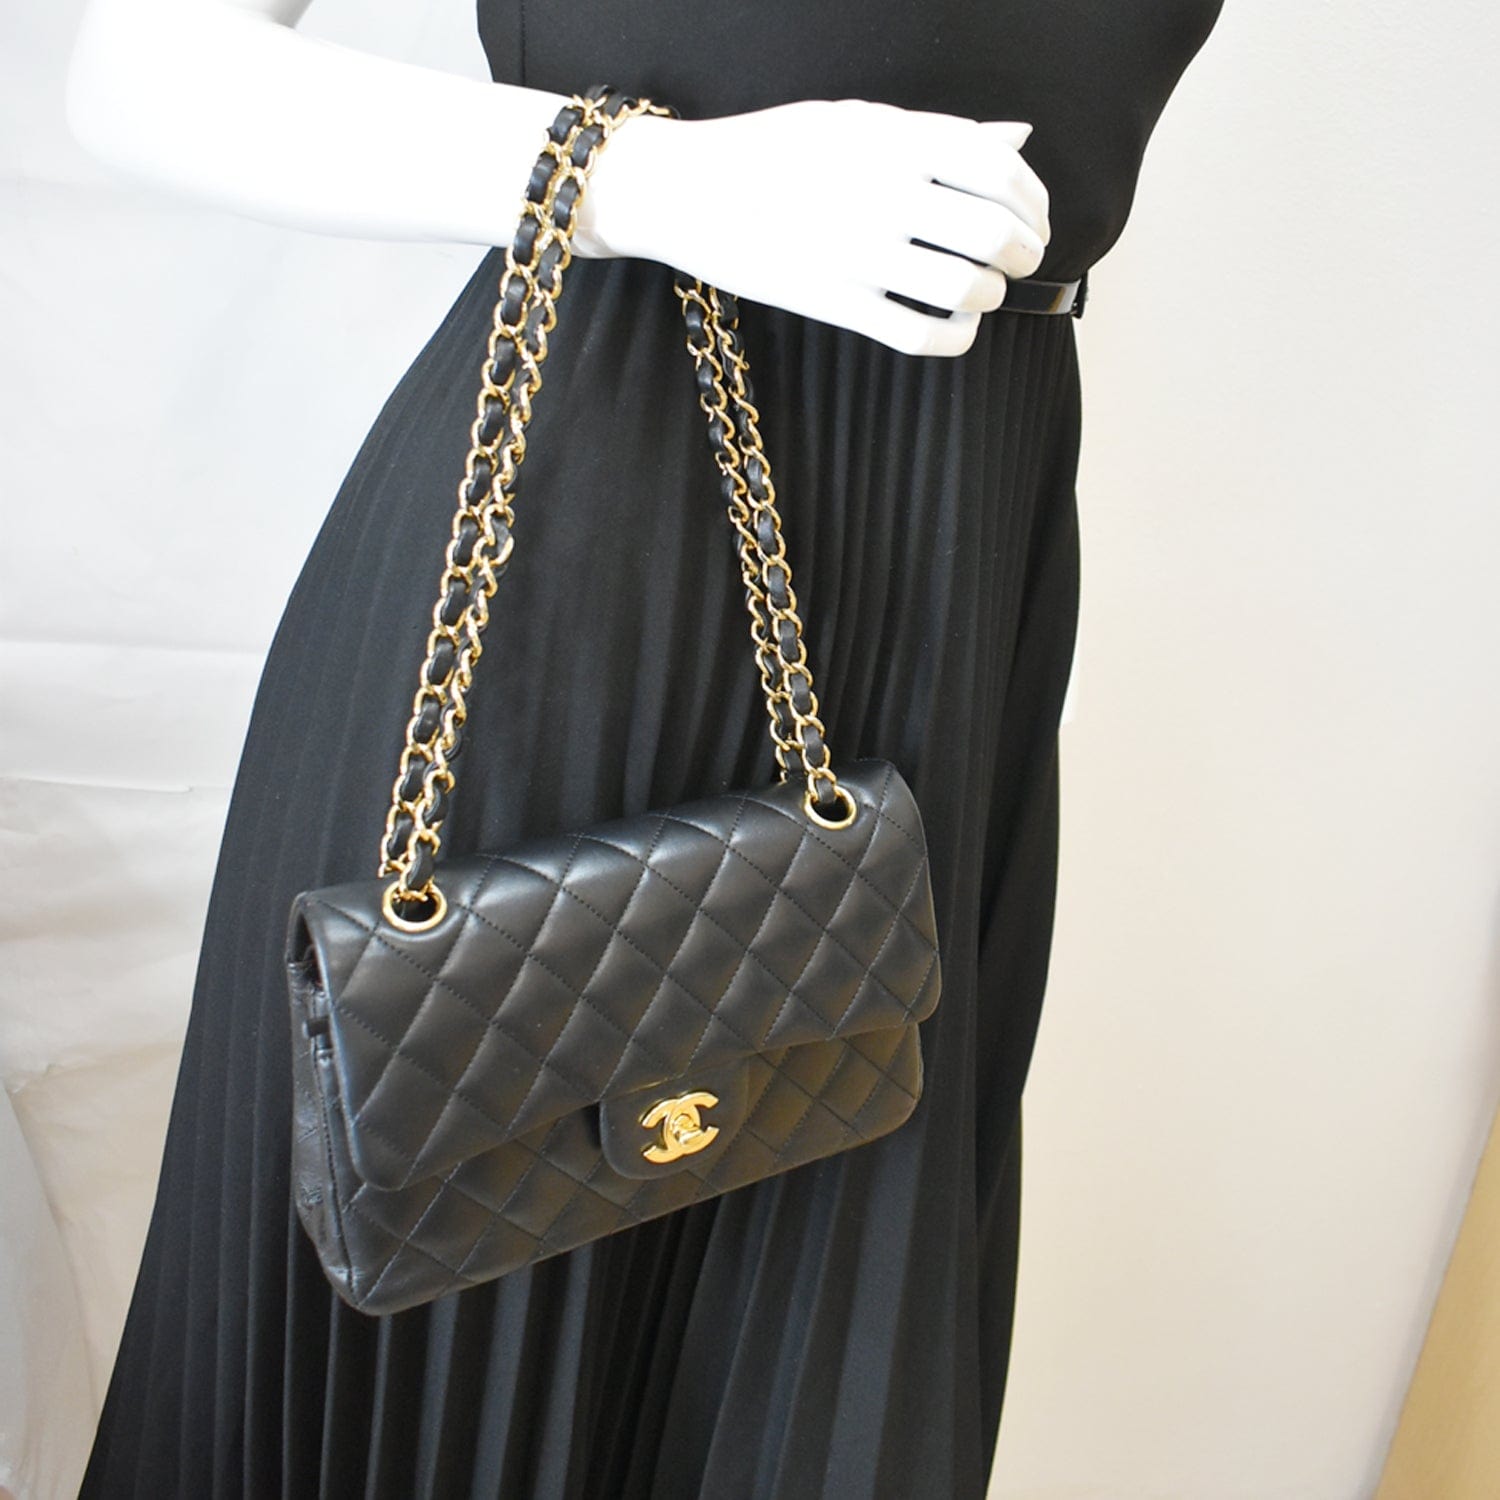 Black Chanel Small Classic Lambskin Single Flap Crossbody Bag